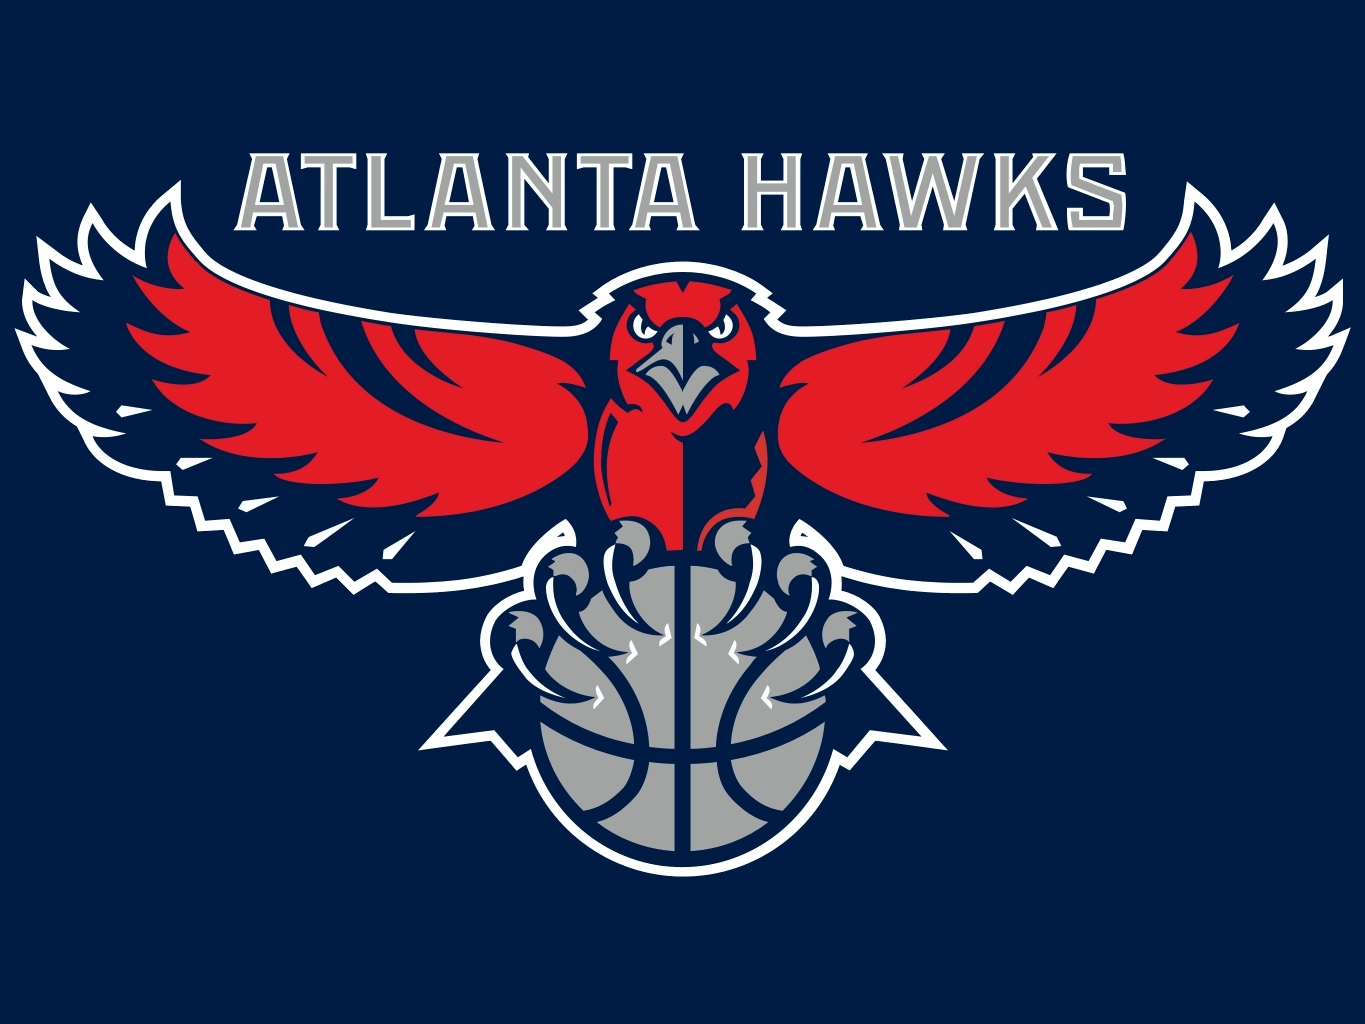 Buy Atlanta Hawks Tickets